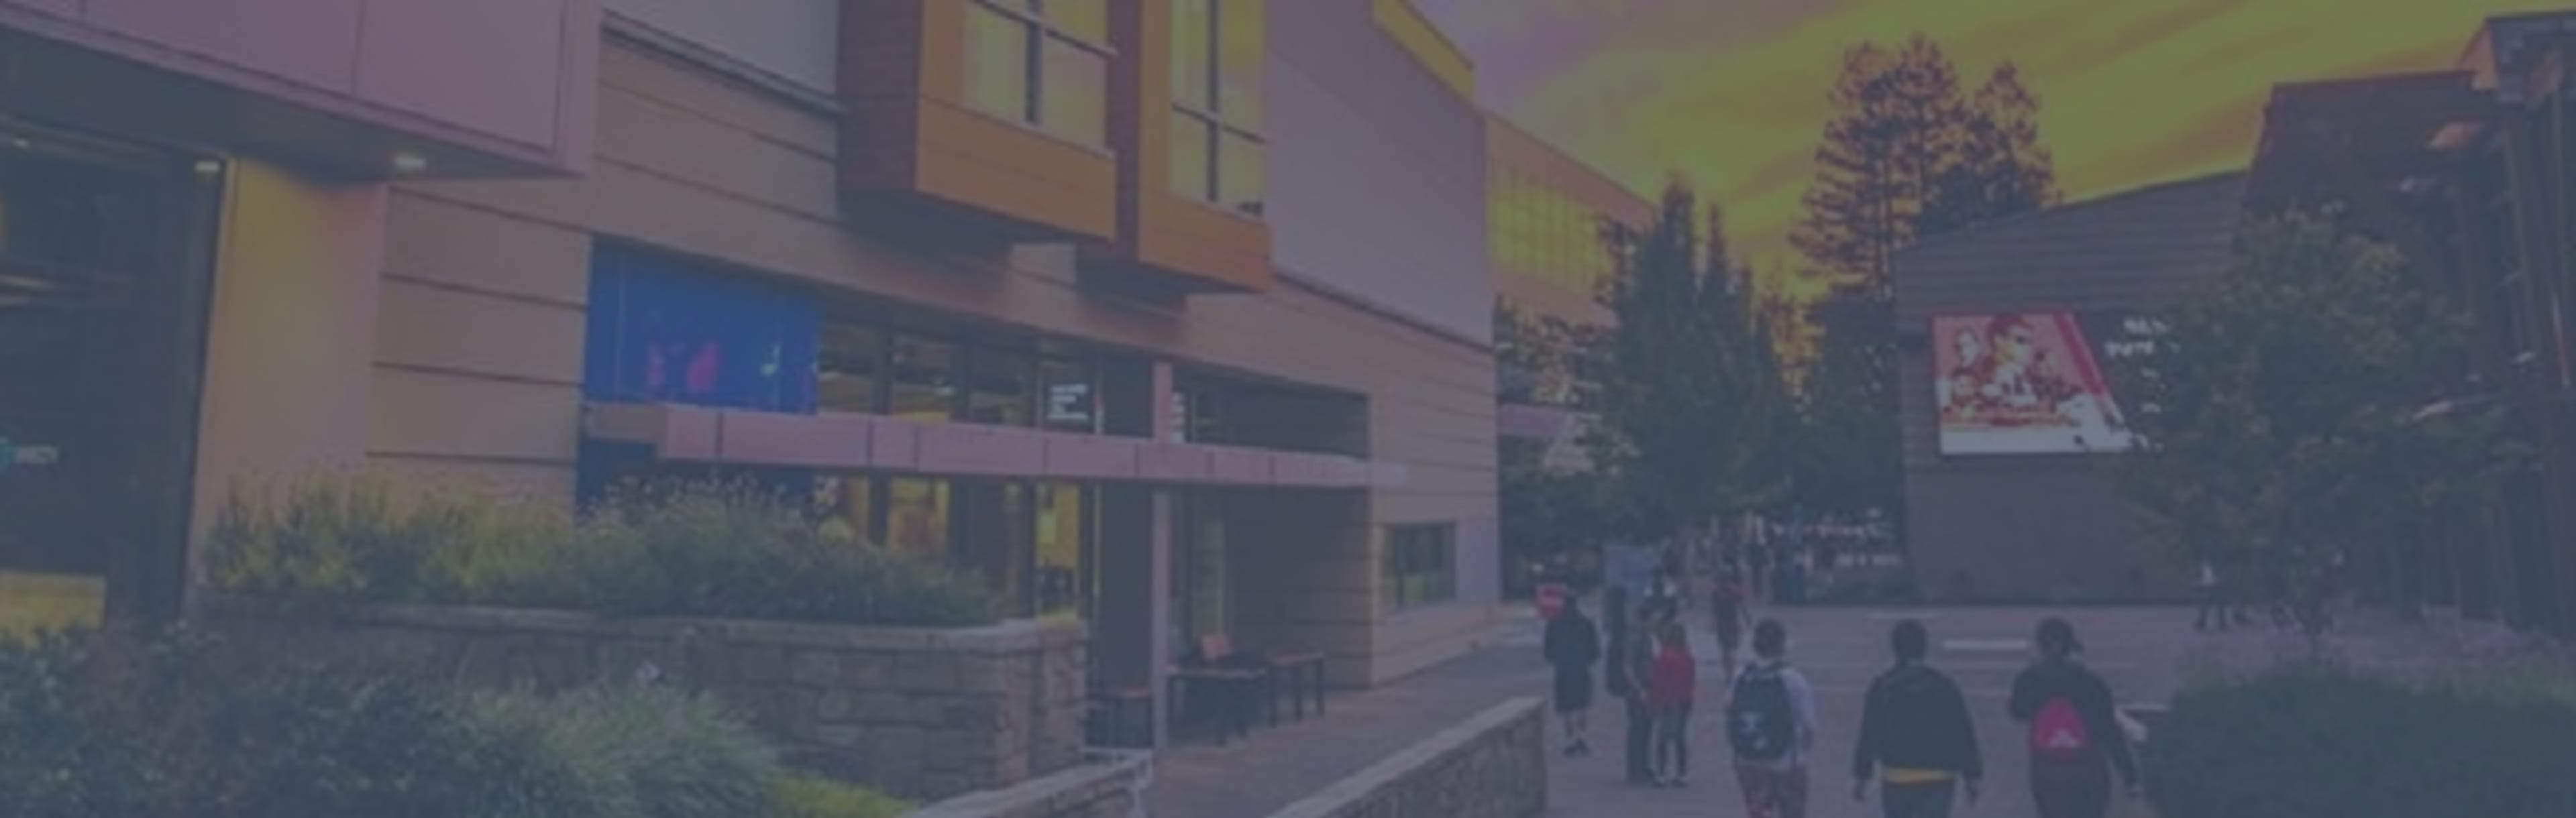 California State University Sonoma Sonoma MBA-Programme